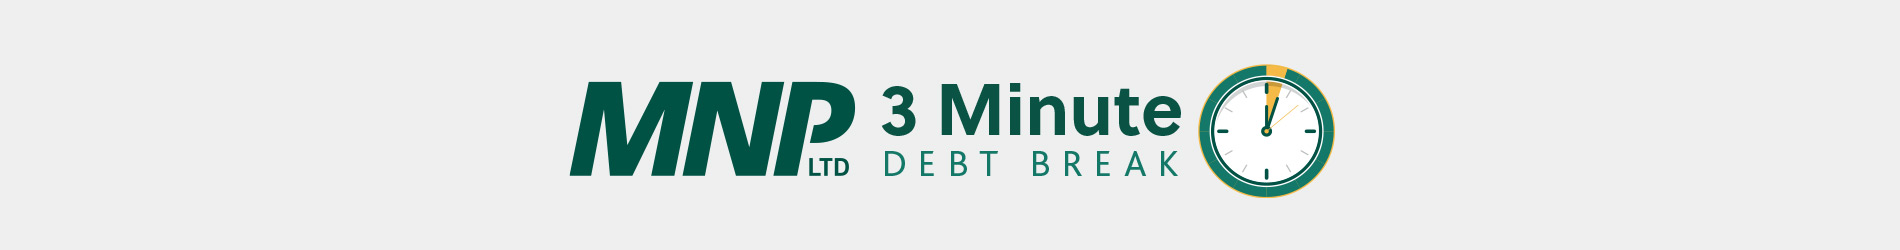 MNP LTD 3 Minute Debt Break